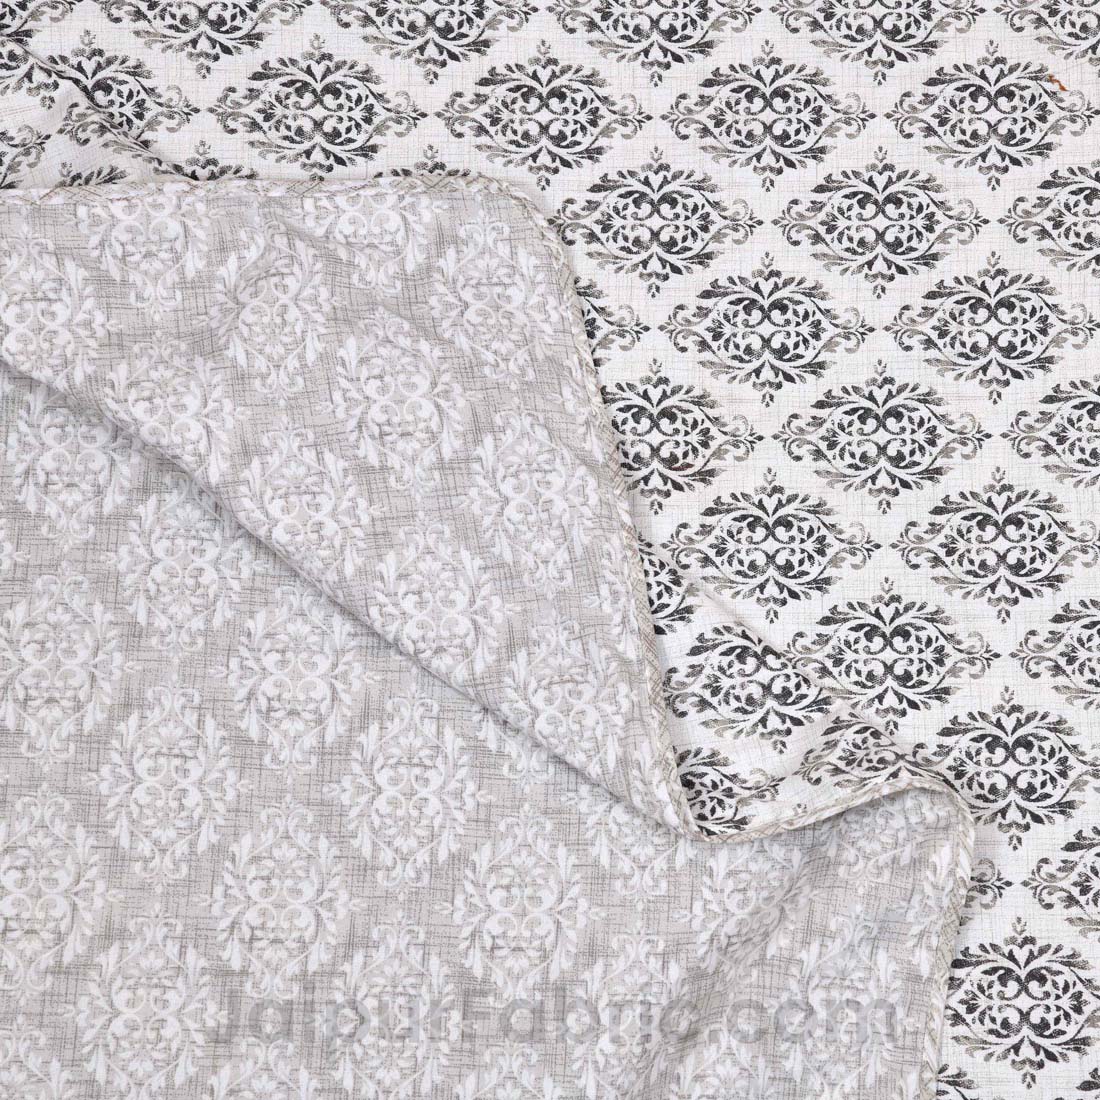 JaipurFabric® Gray Ethnic Single Bed Reversible Dohar